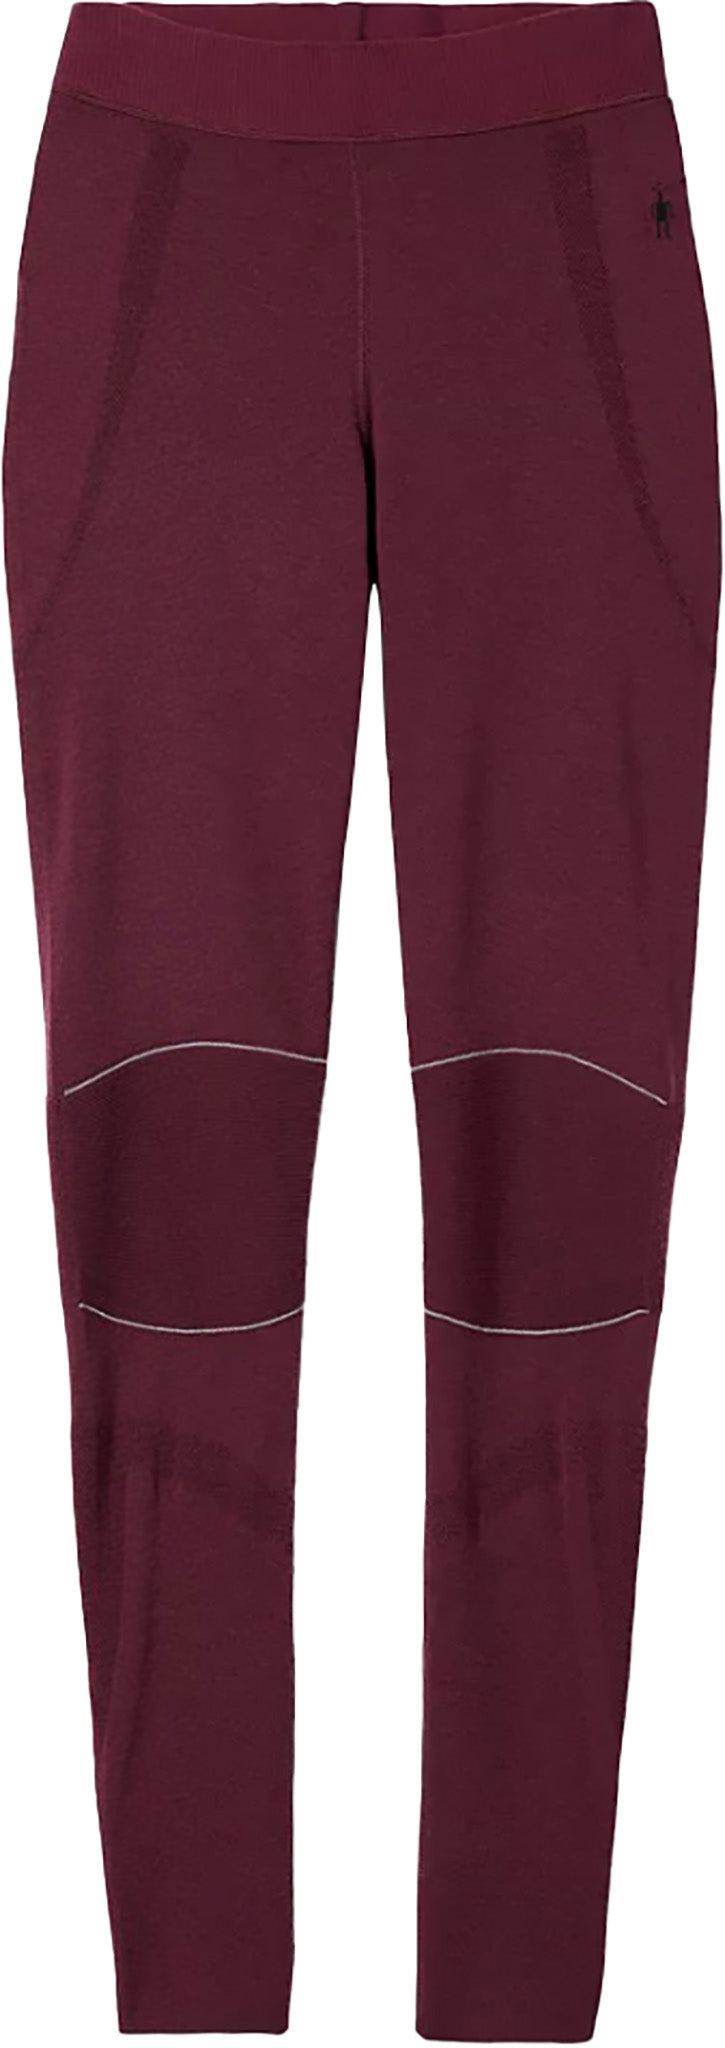 Merino Wool Long Sleeve (Cherry Red) Thermal Base Layer Underwear